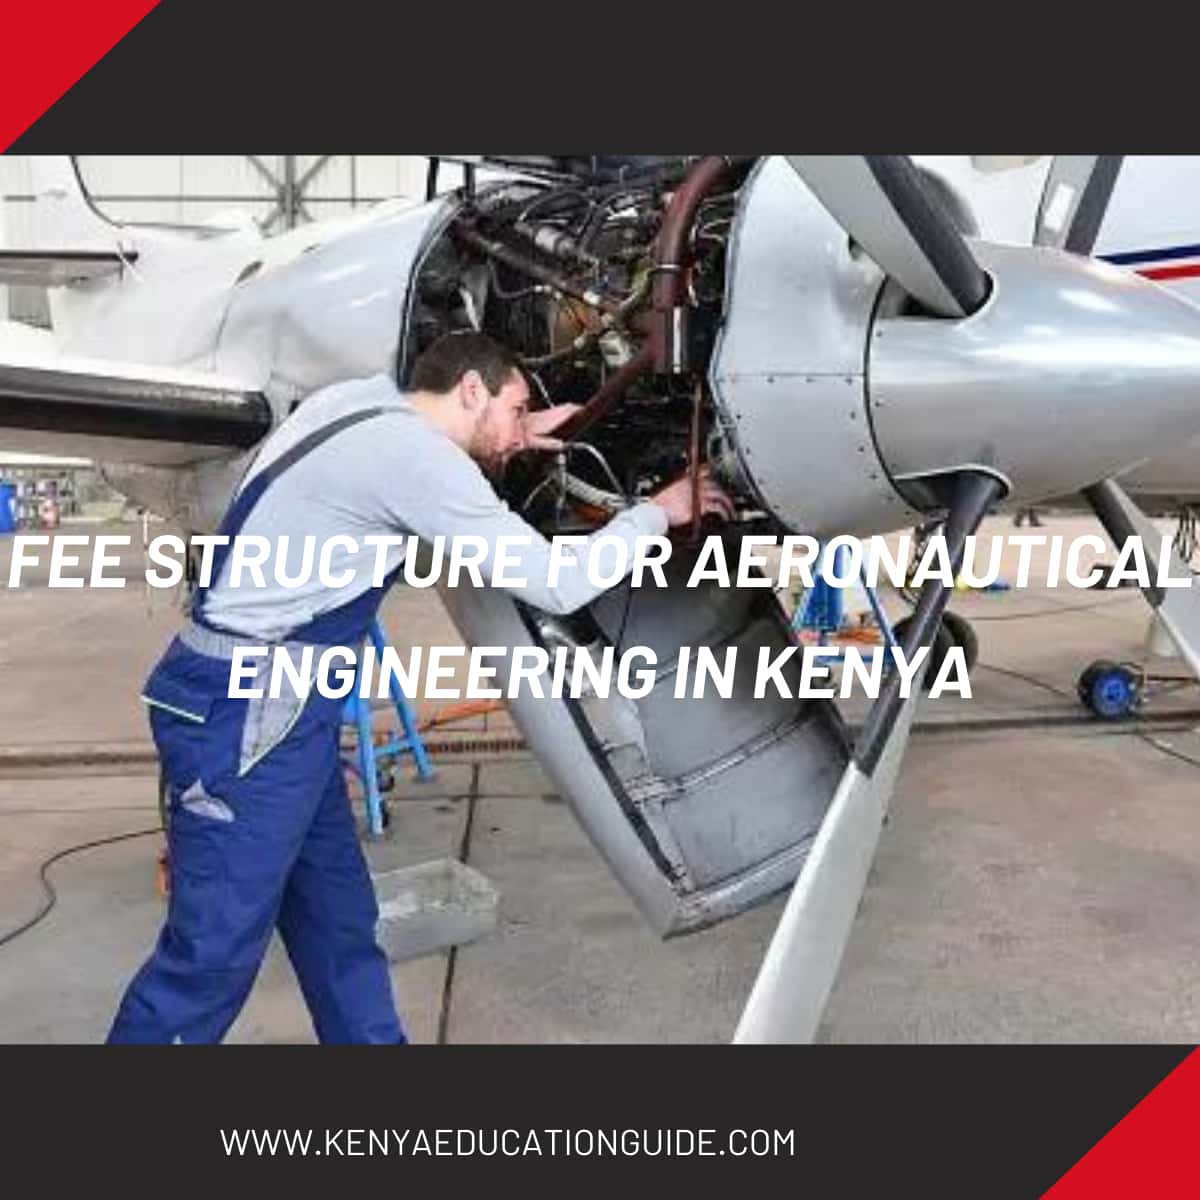 Fee structure for aeronautical engineering in Kenya